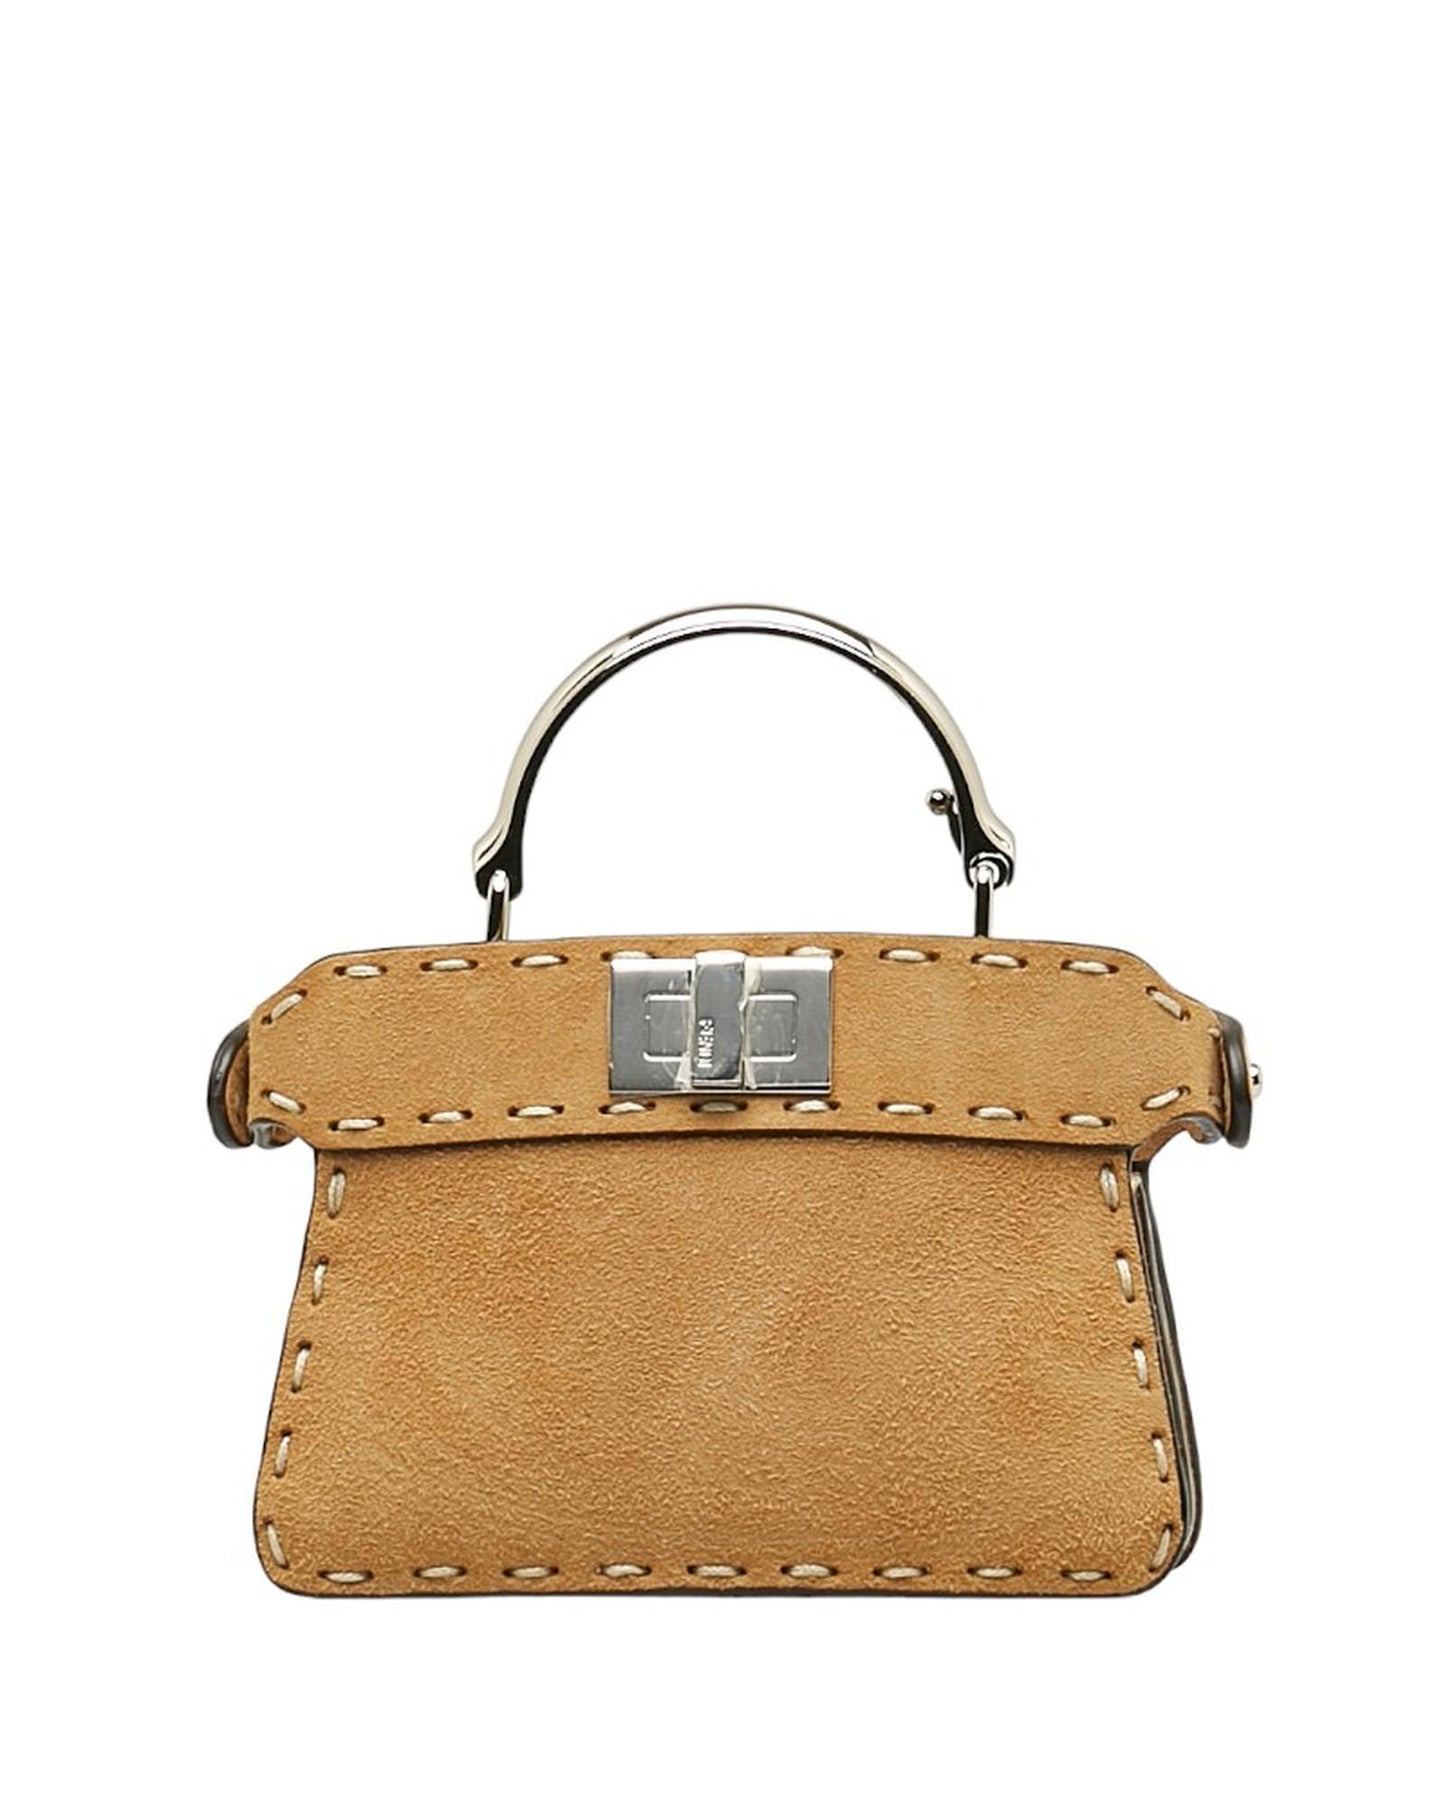 Fendi Women's Brown Micro Suede Peekaboo Bag in Excellent Condition in Brown